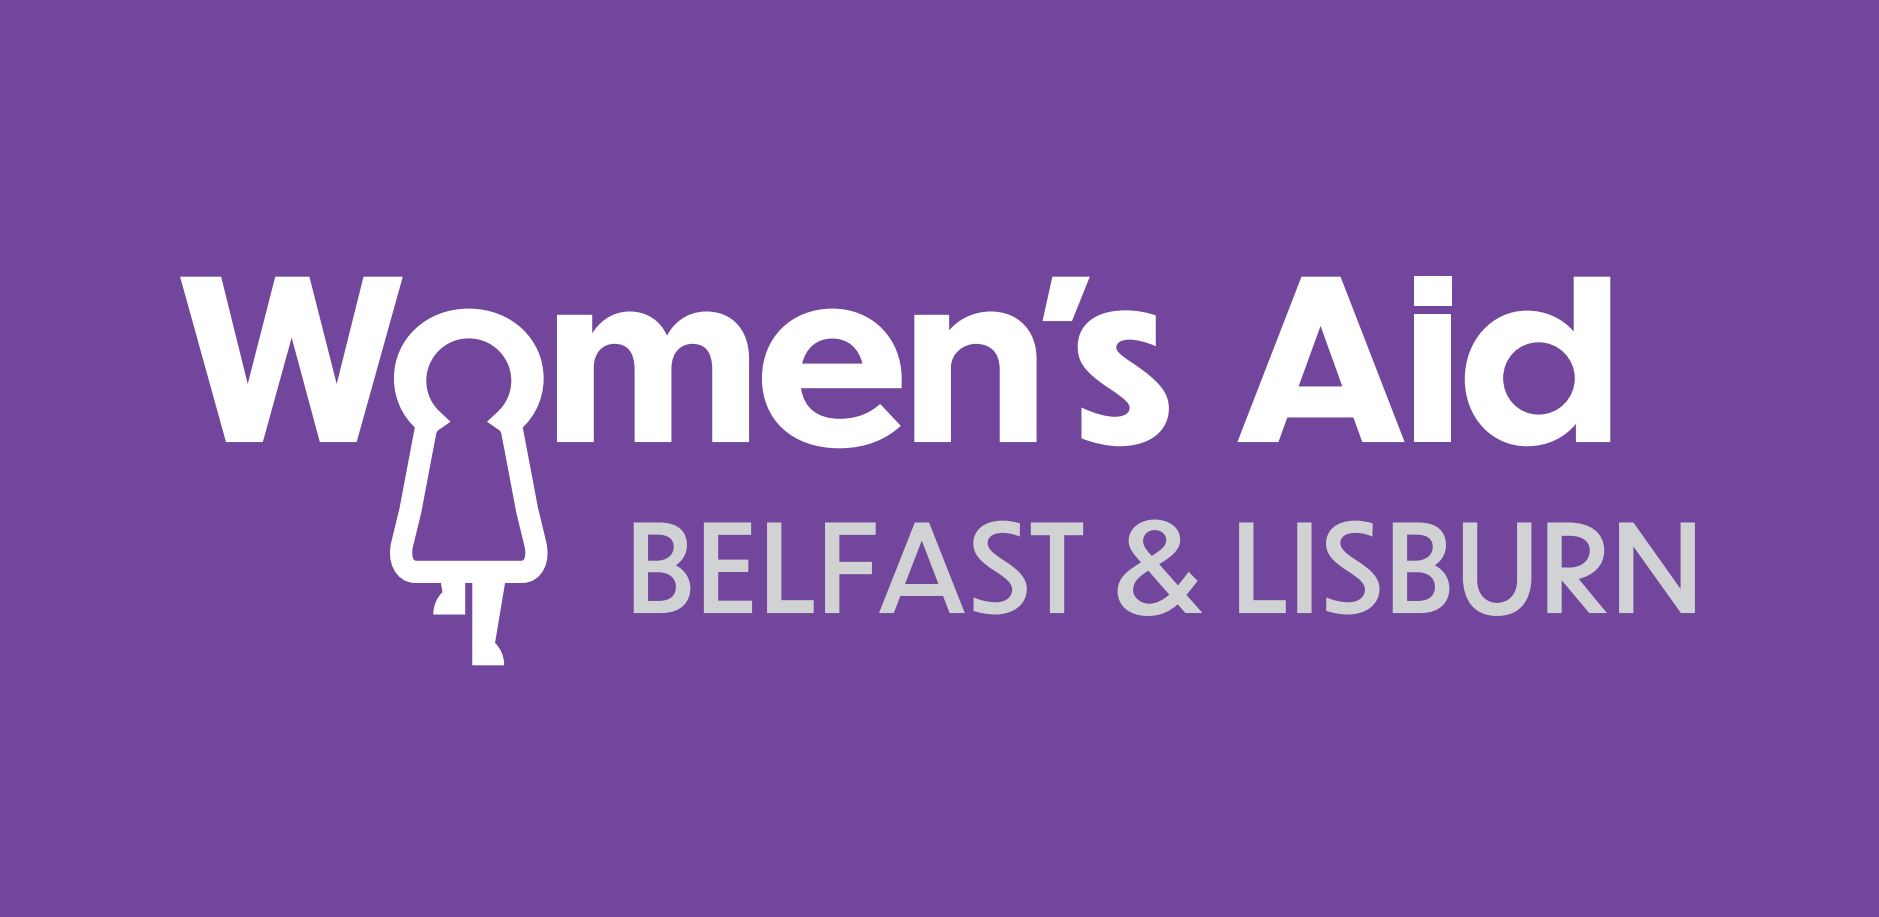 Womens-aid-logo-(1).JPG